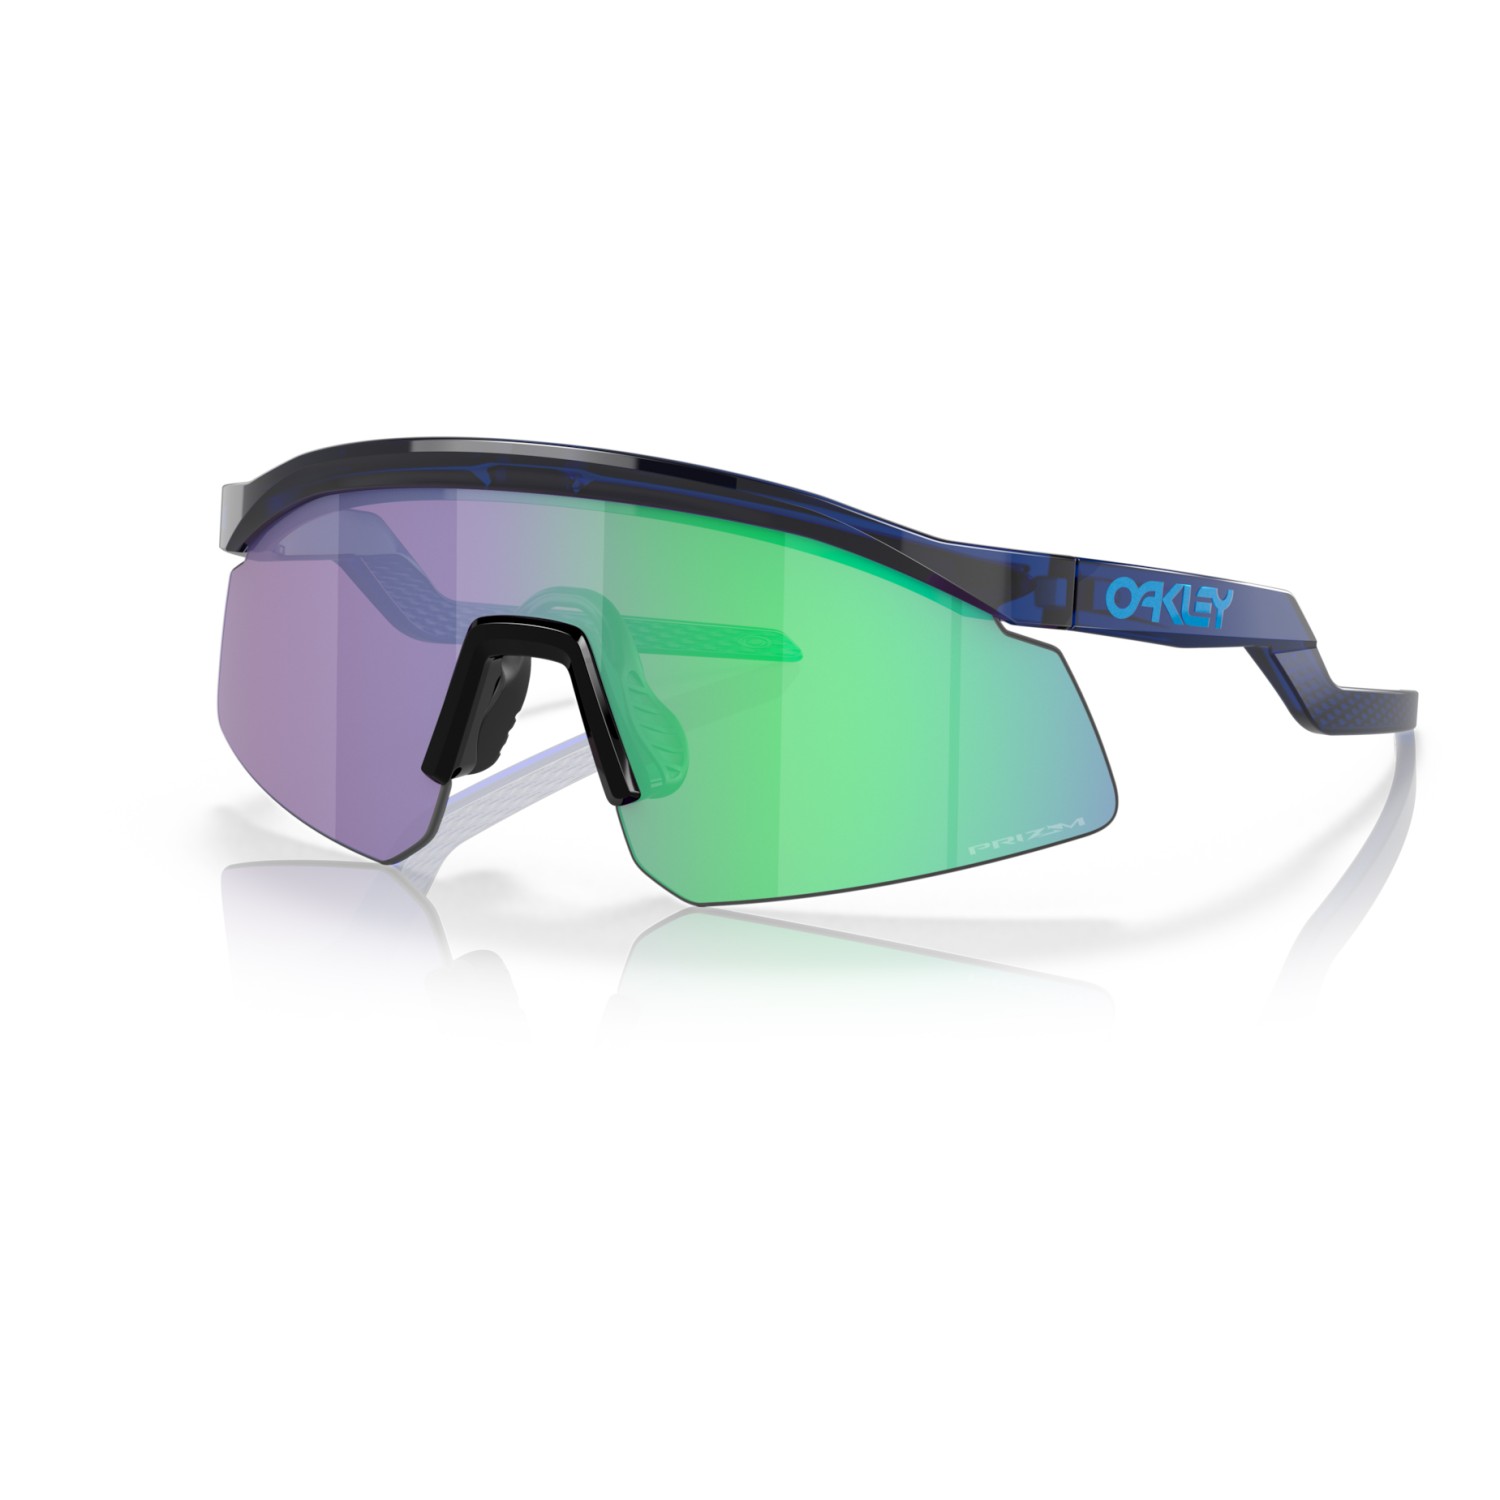 Солнцезащитные очки Oakley Hydra S3 (VLT 14%), цвет Translucent Blue цена и фото